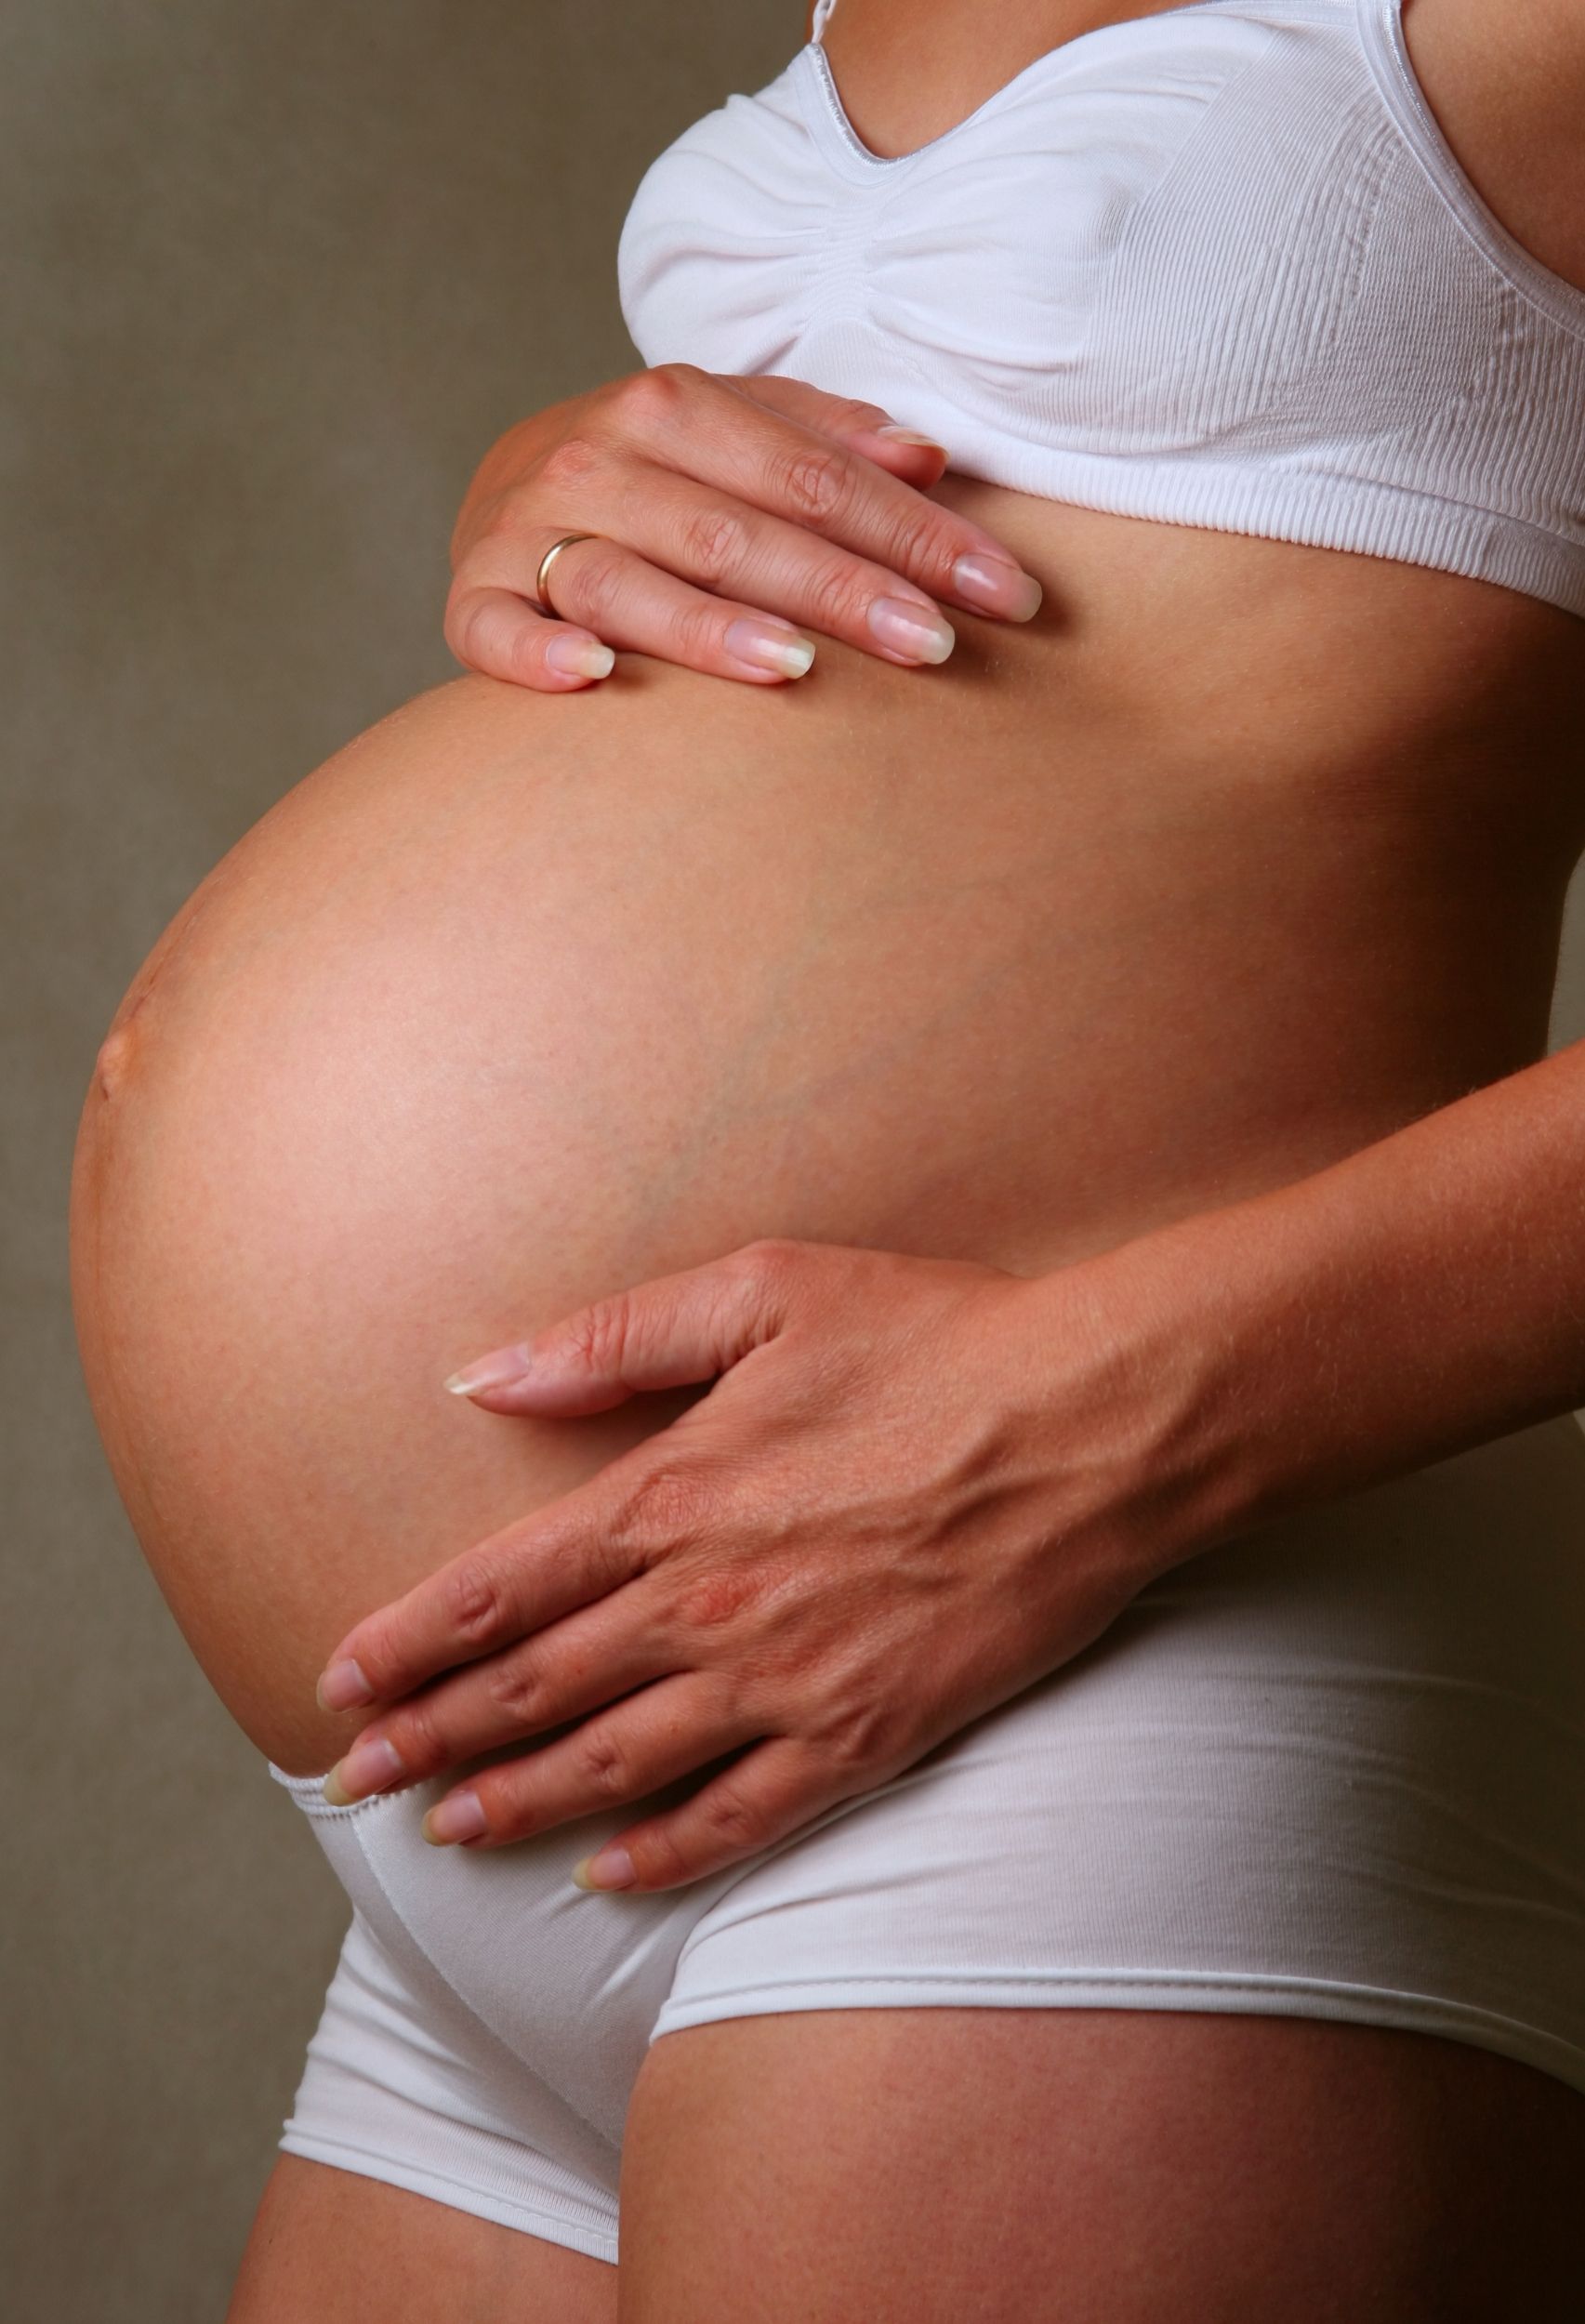 Preparing For A Future Pregnancy - Rita Reviews